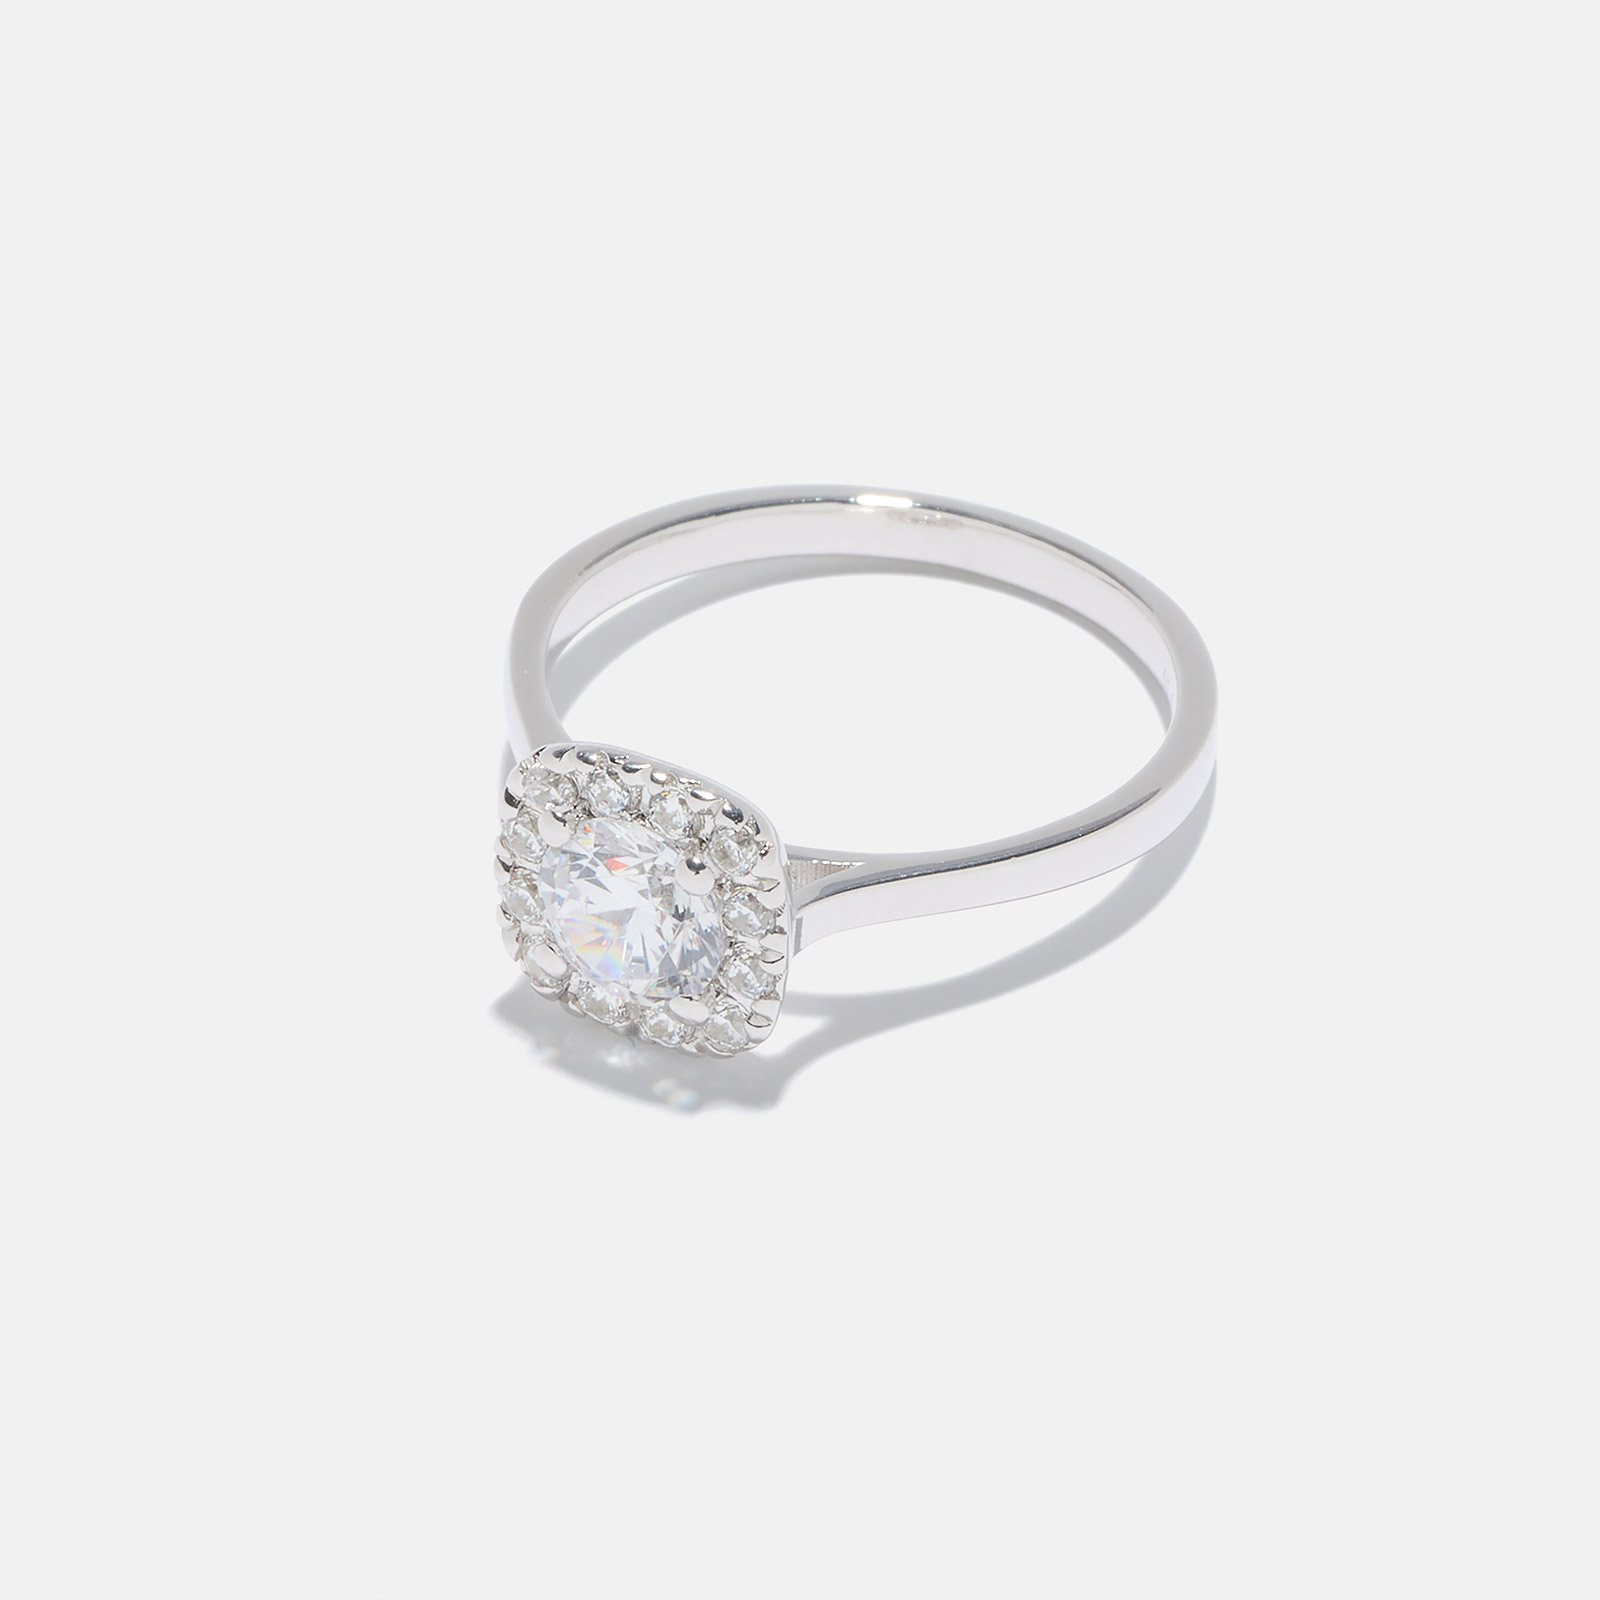 Ring Maria - 18k vitguld, labbodlade diamanter 0,7 carat